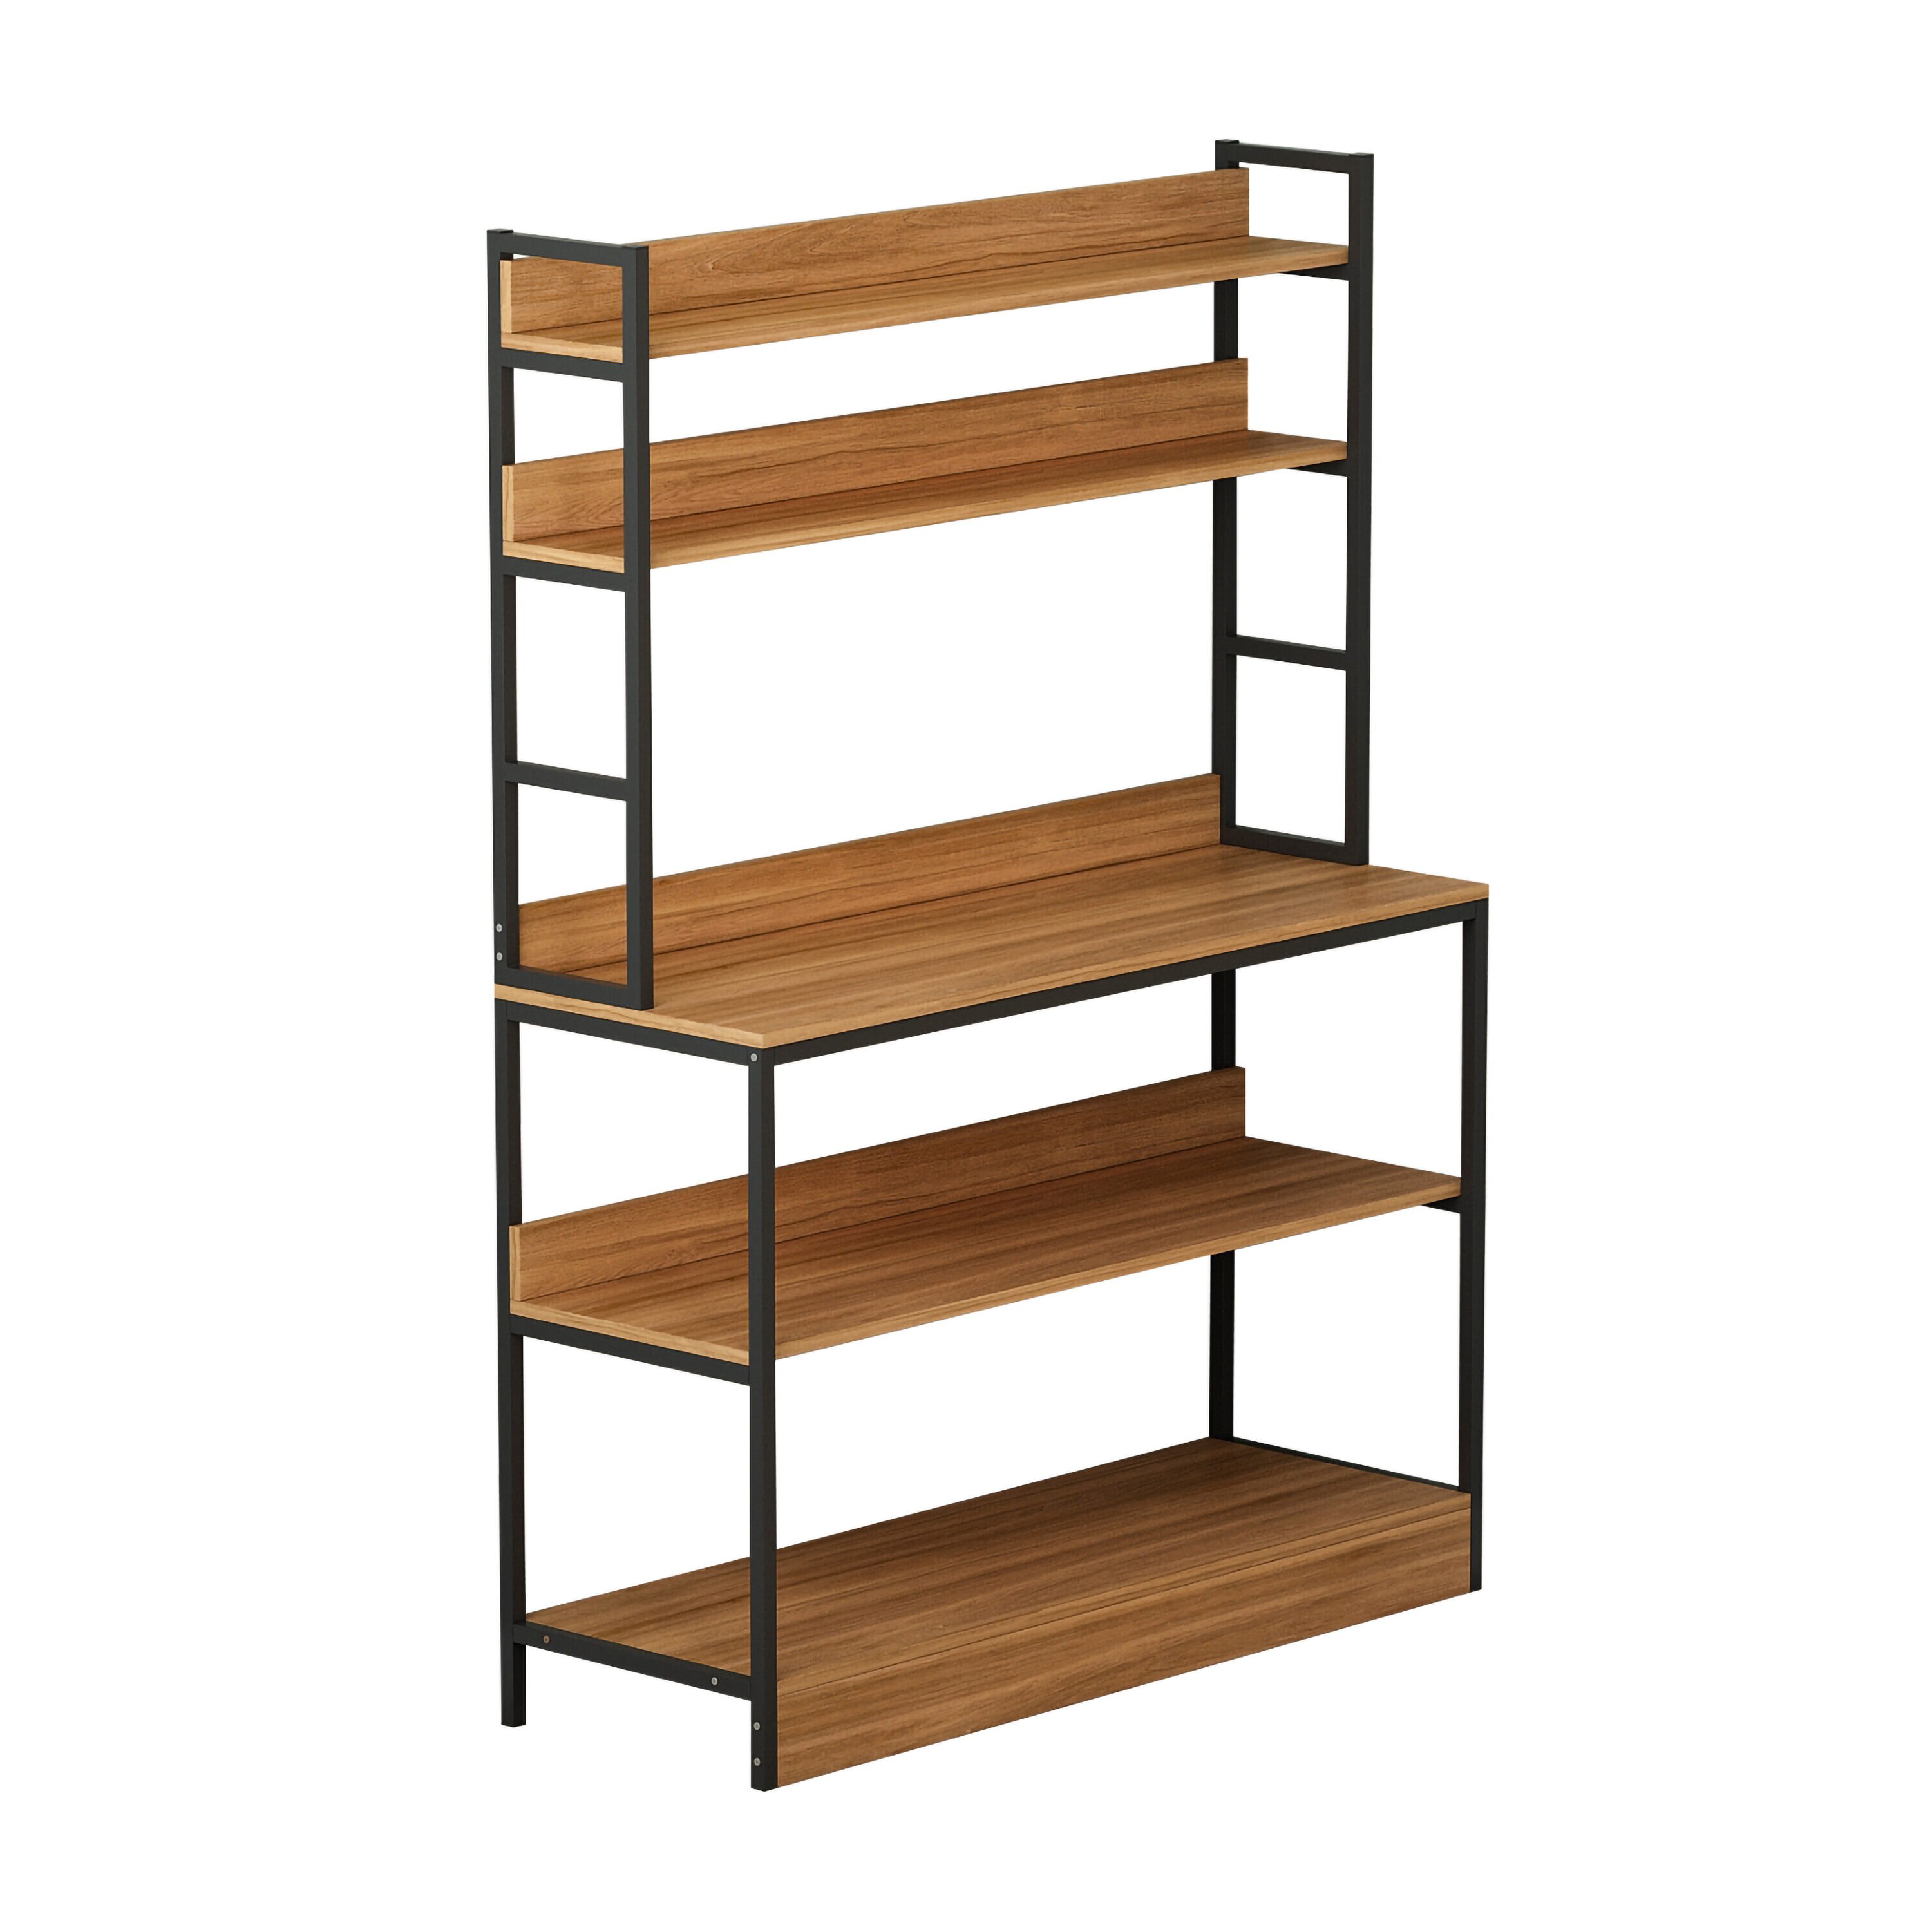 39.4 Standard Baker's Rack with Wooden Shelves 17 Stories Color: Burlywood